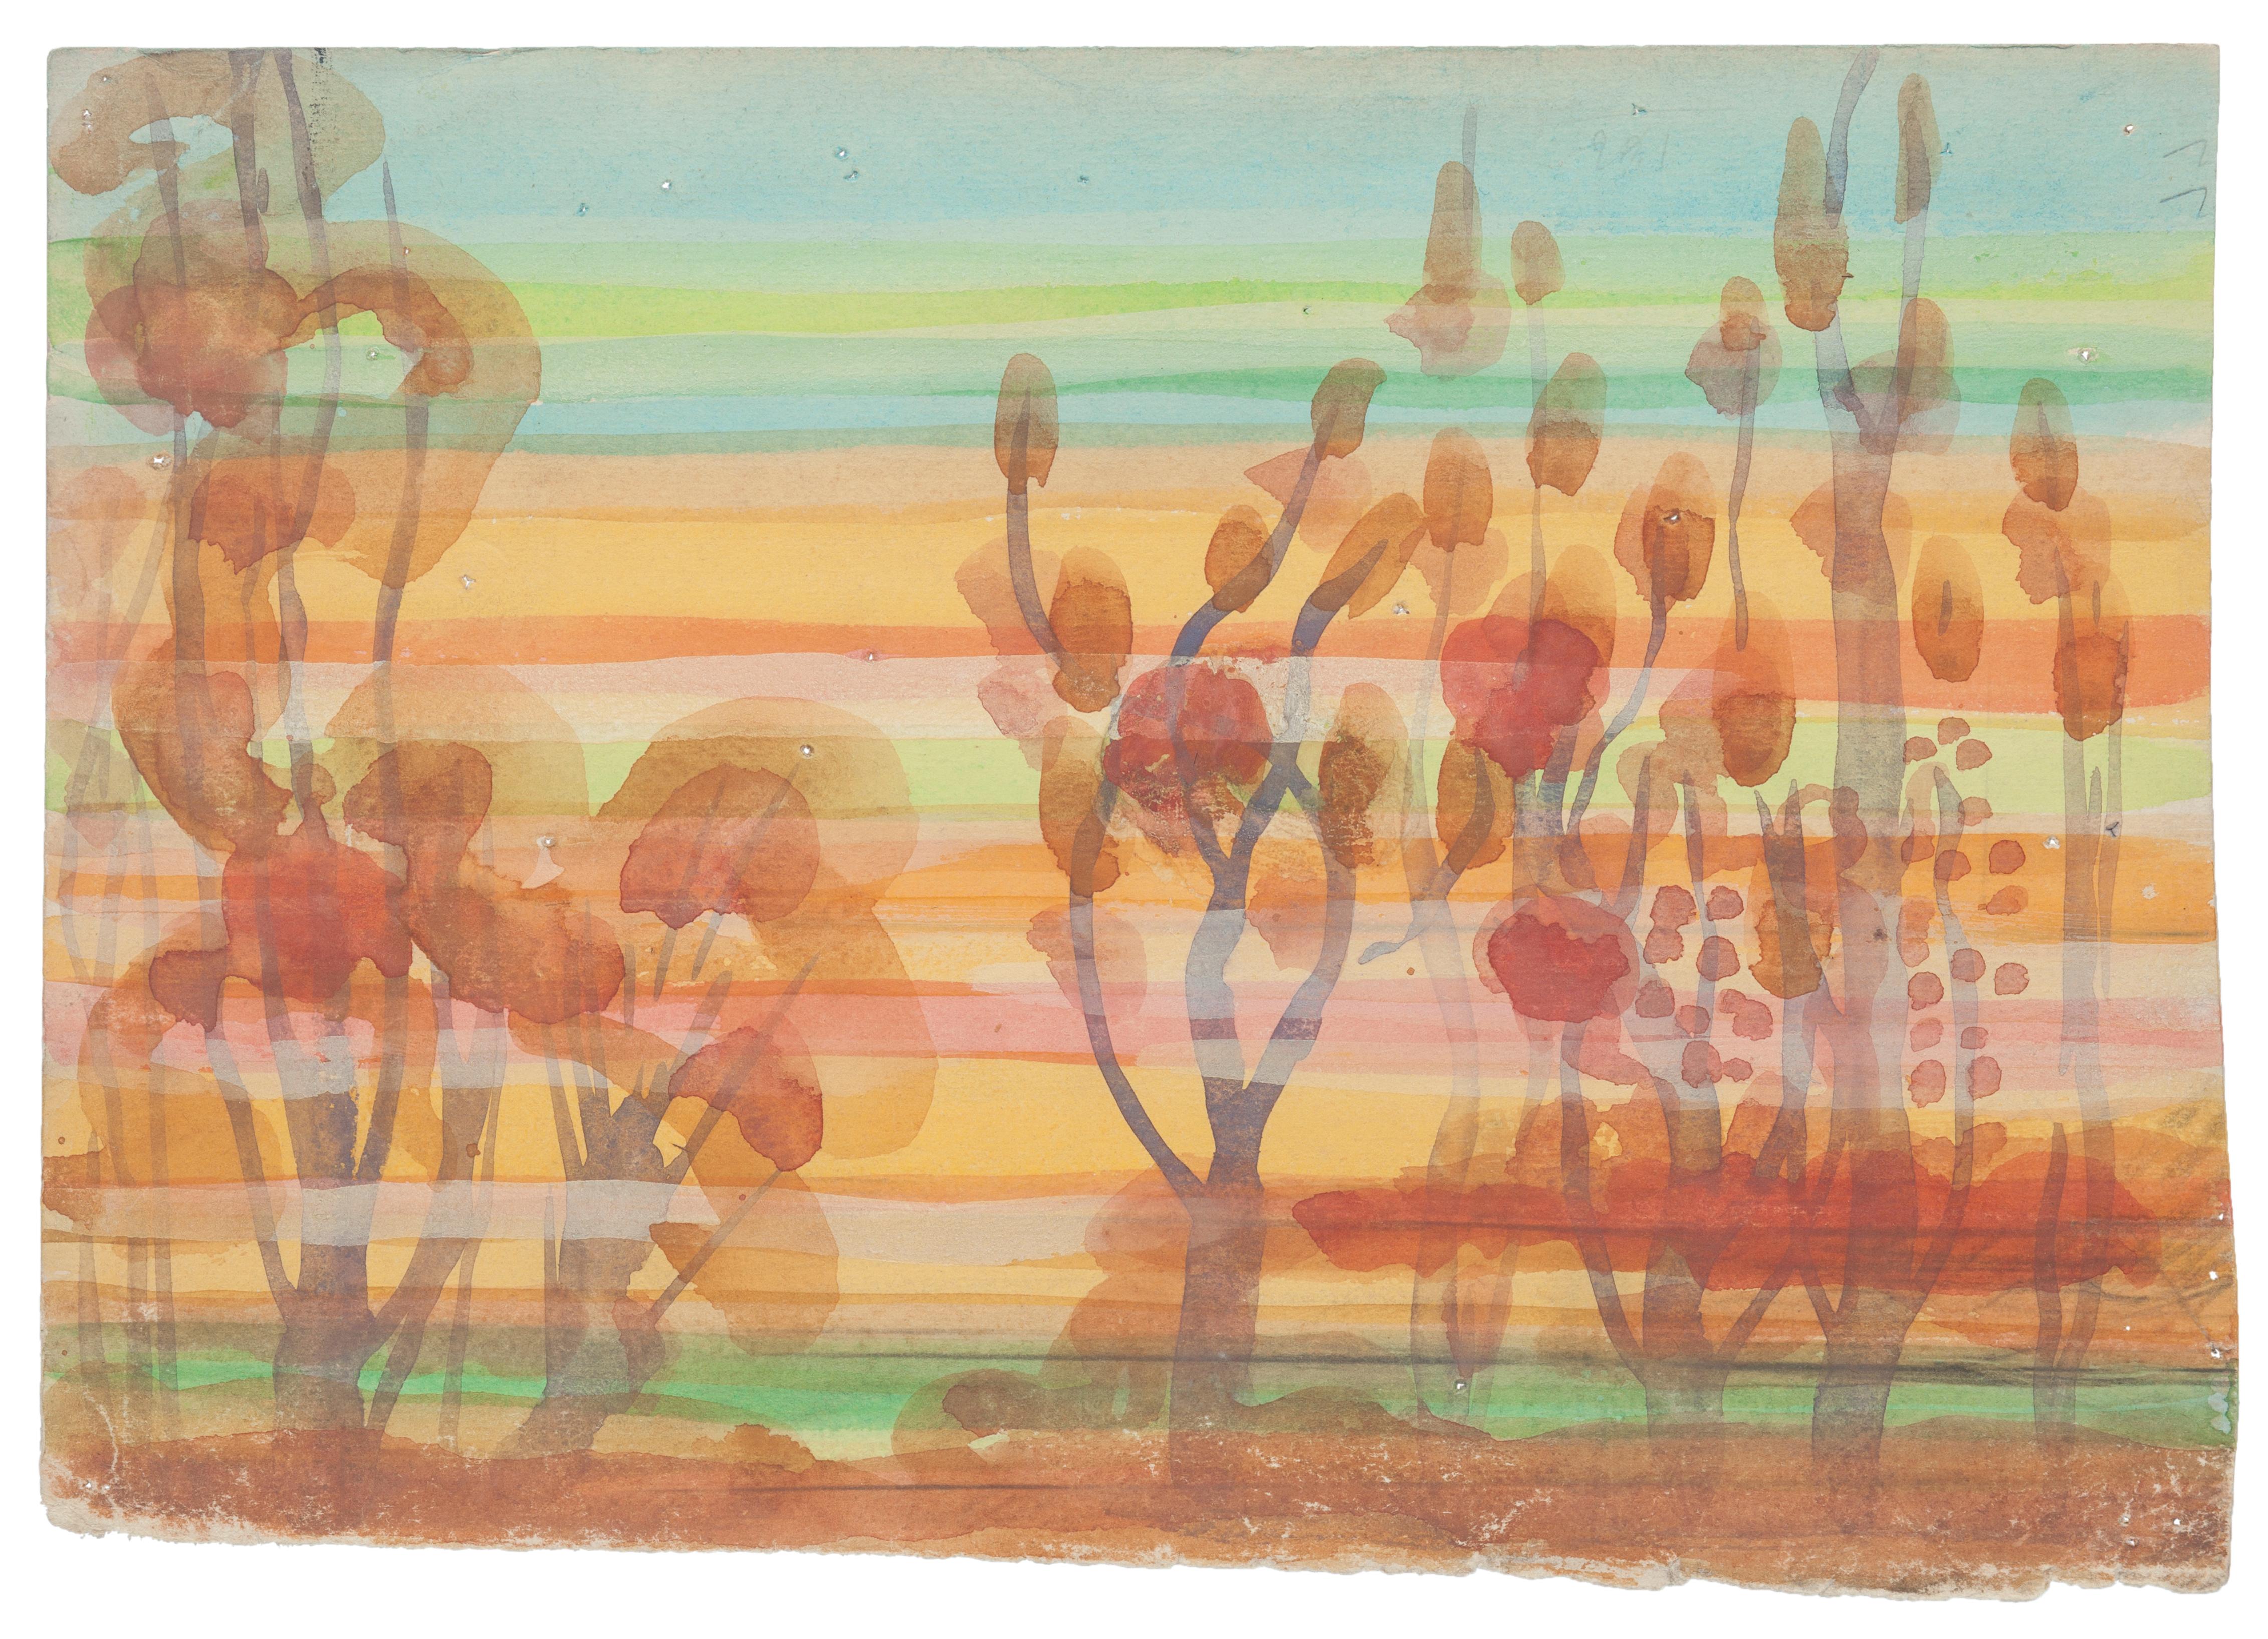 Desextracion - Original Watercolor on Paper by Jean Delpech - 1960s